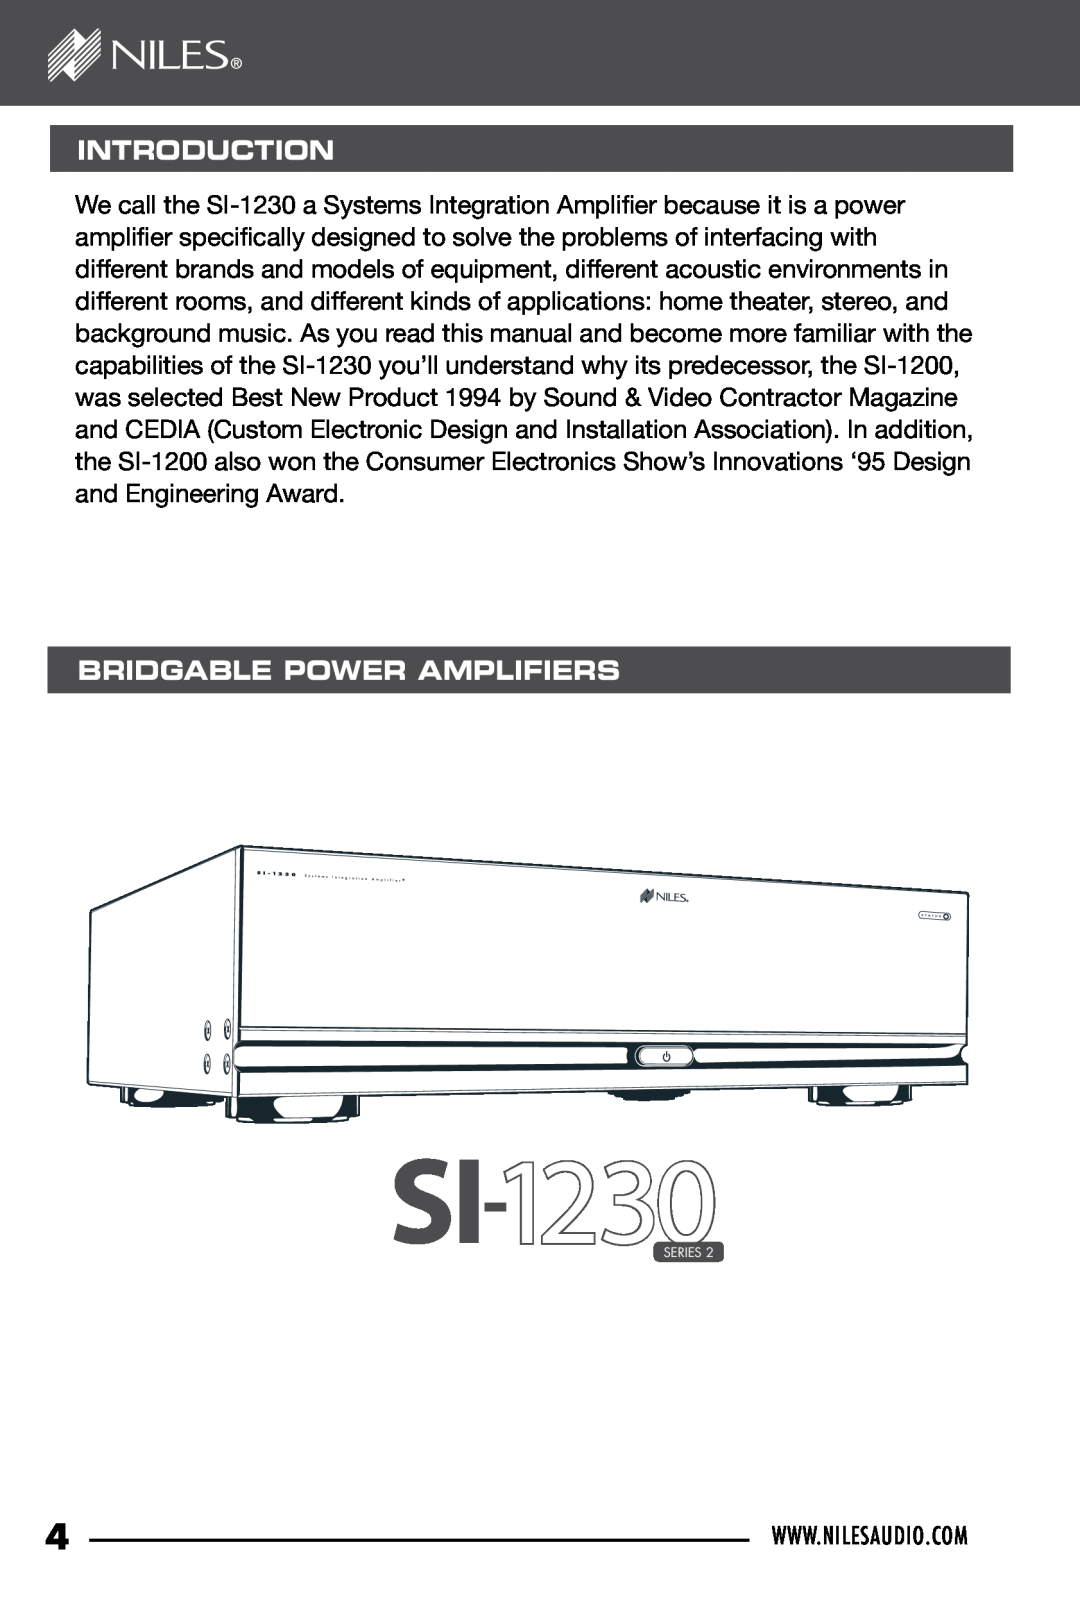 Niles Audio SI-1230 manual Introduction, Bridgable Power Amplifiers 